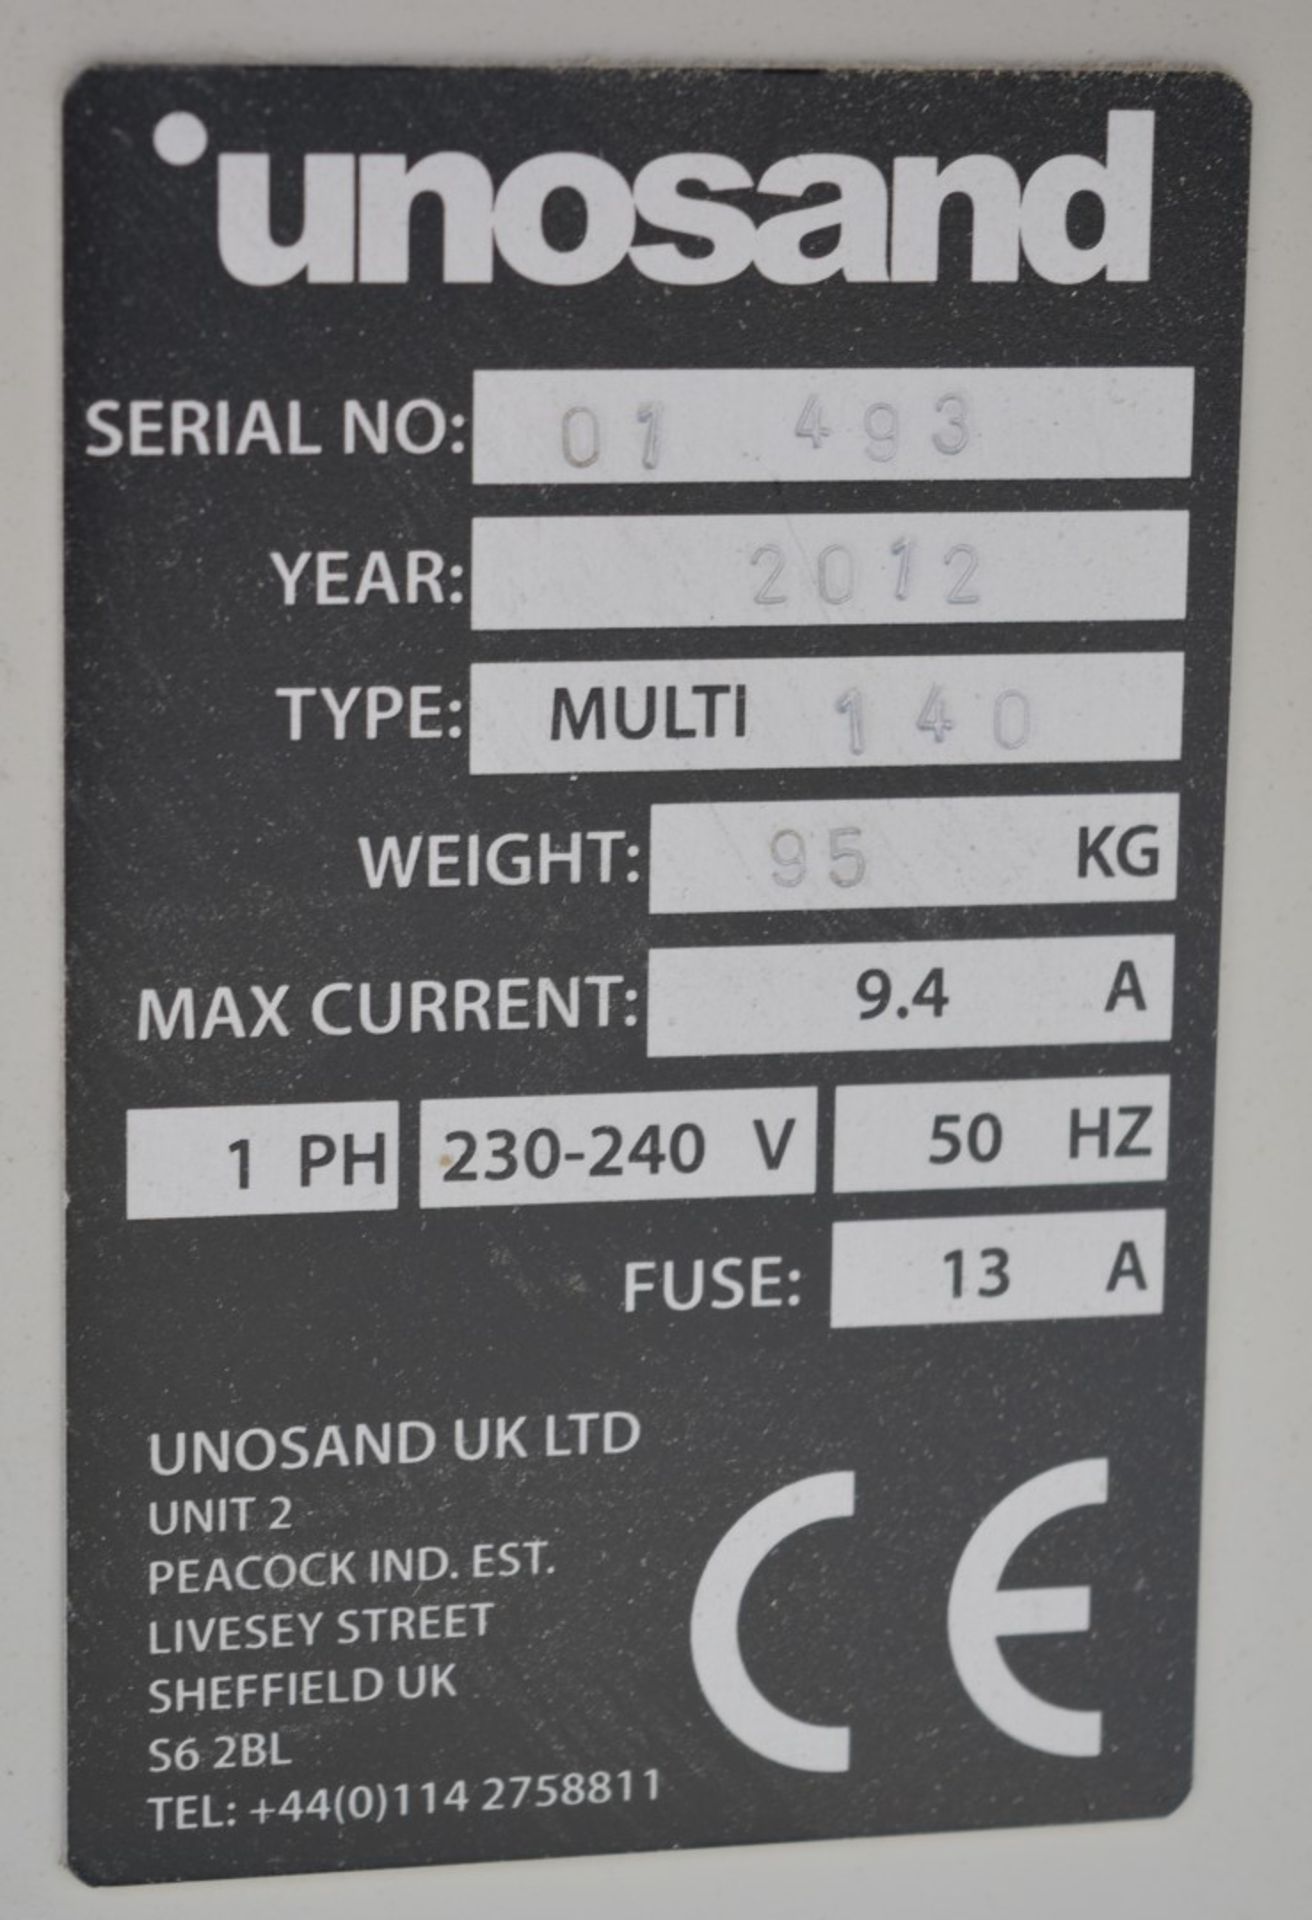 1 x Unosand Multi 140 Denibbing Sander - 240v UK Plug - Year 2012 - Dimensions H109 x W75 x D81 - Image 7 of 12